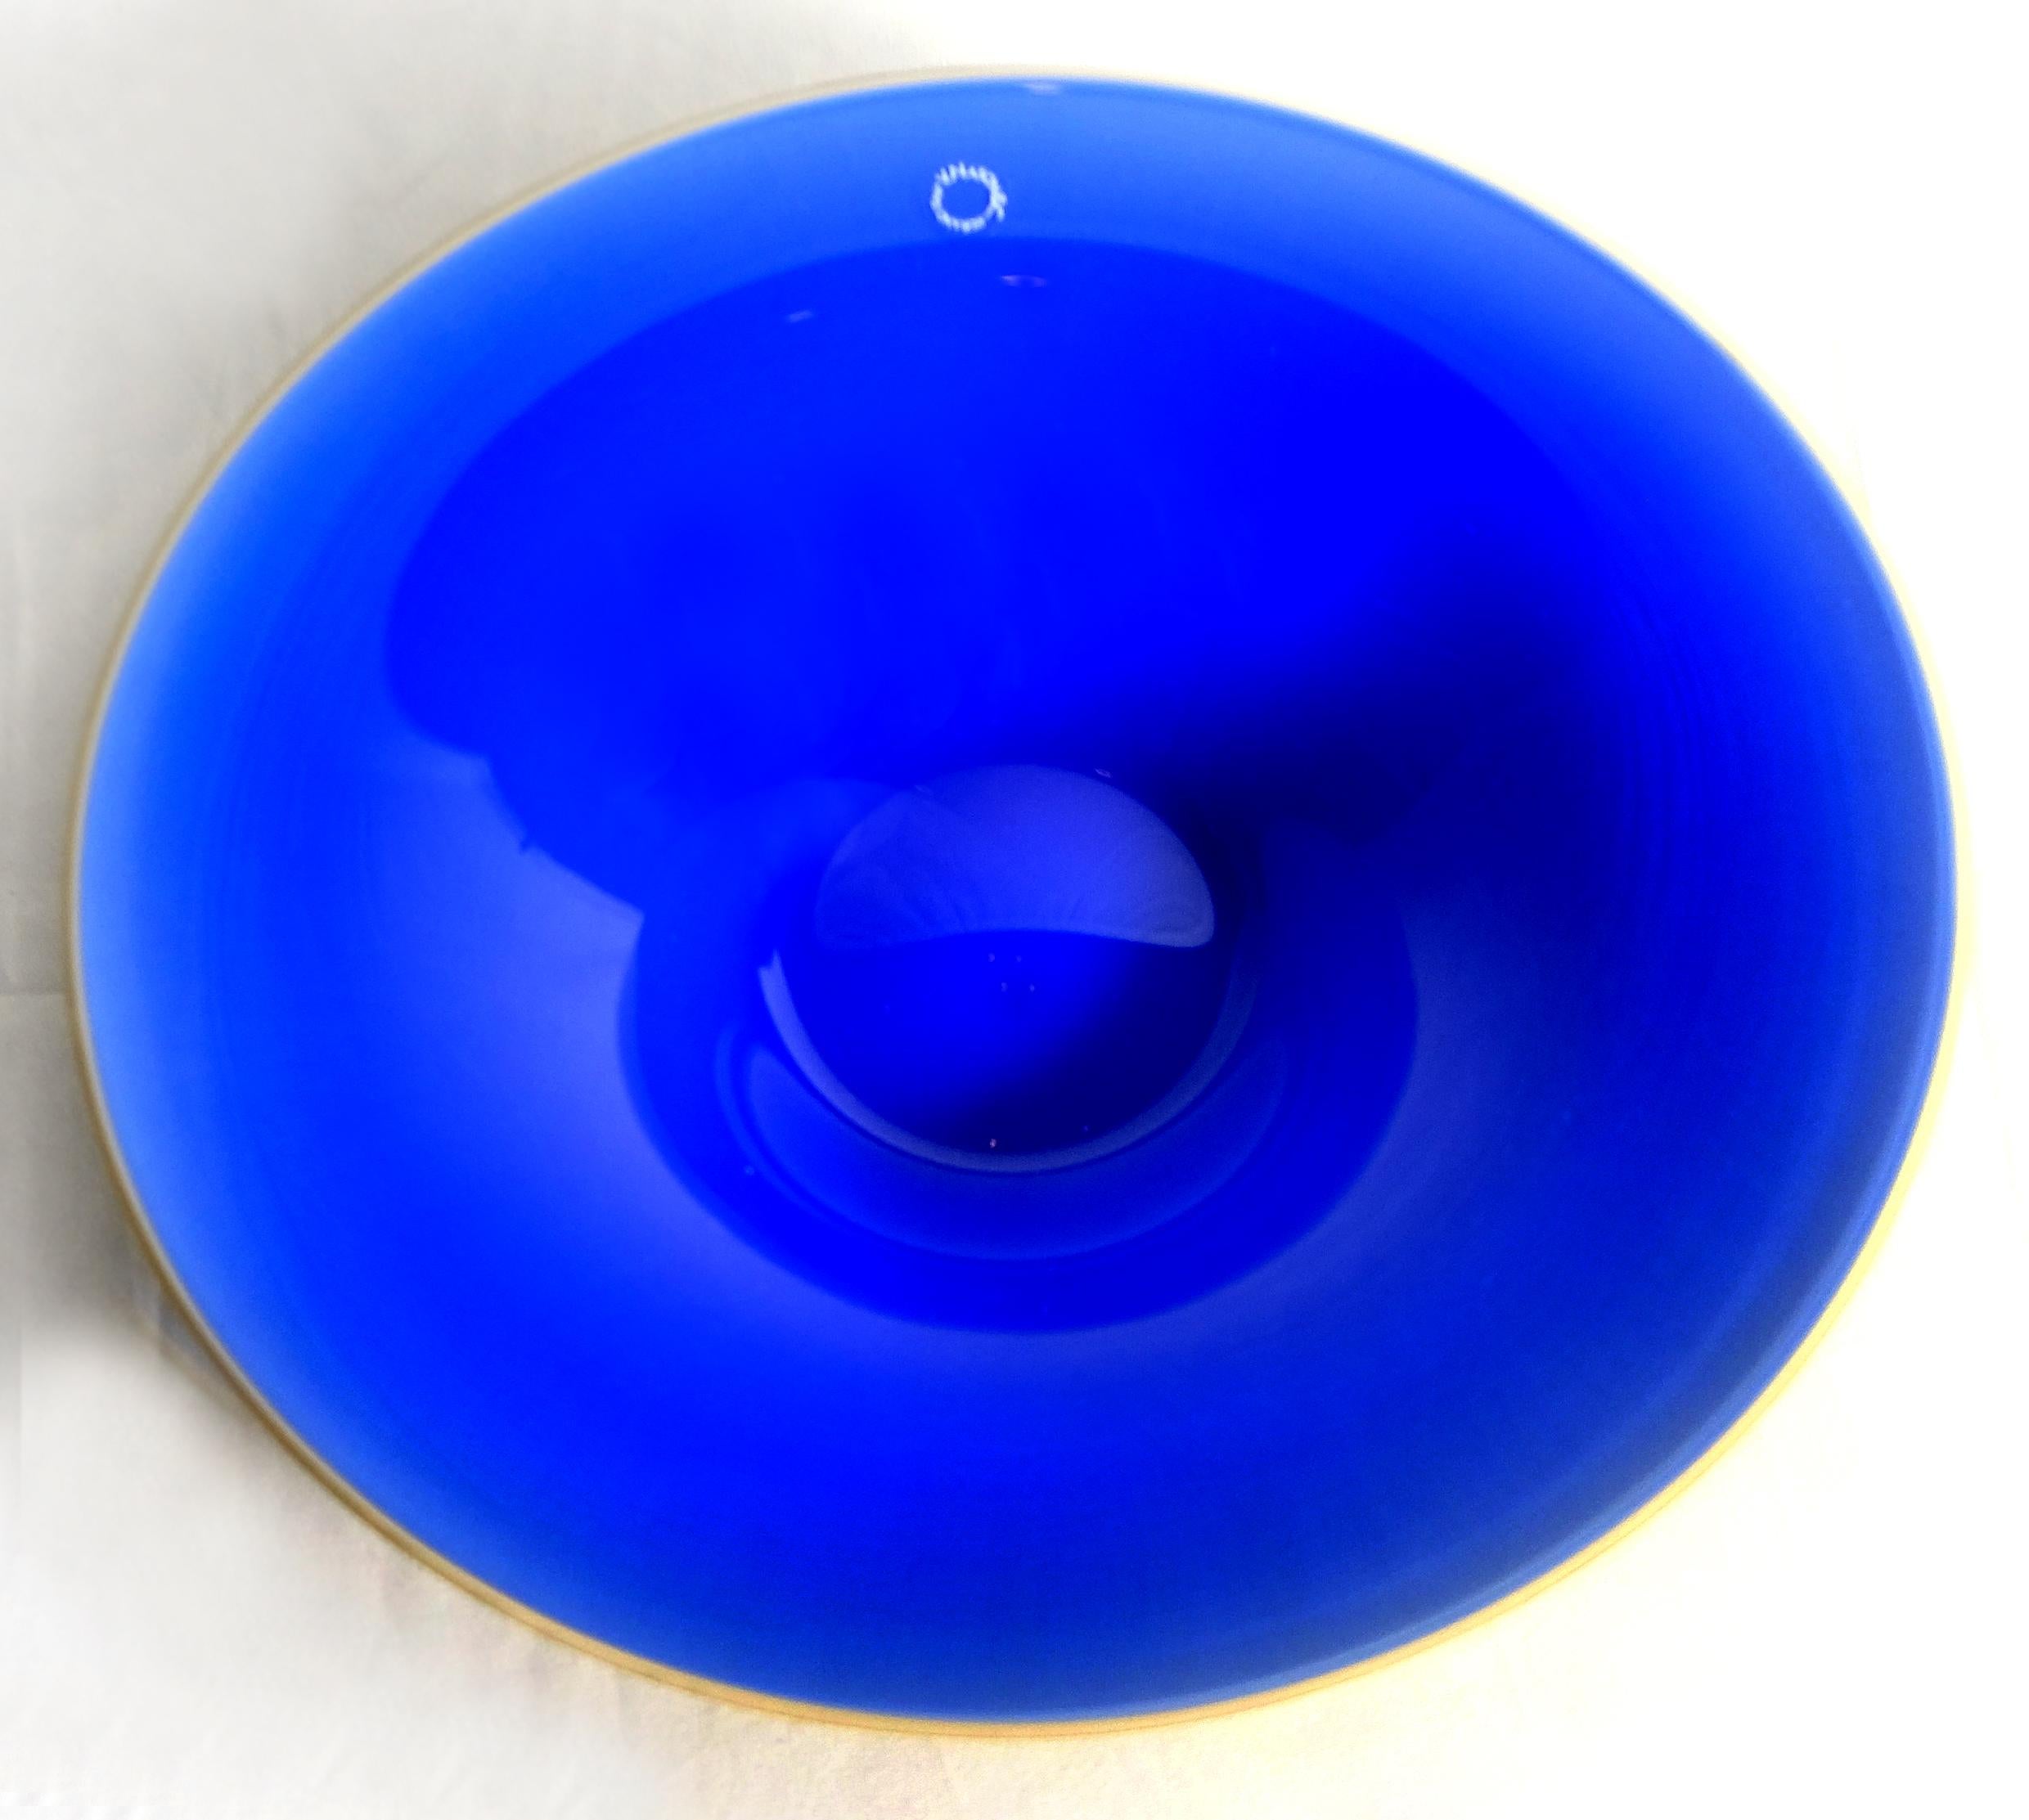 V. Nason & C., Italy Yellow and Blue Murano Glass Bowl

Offered for sale is a yellow and blue Murano glass bowl or serving dish by V. Nason & C. The bowl retains the original label on the rim.
Vincenzo Nason established his glassworks, Vincenzo